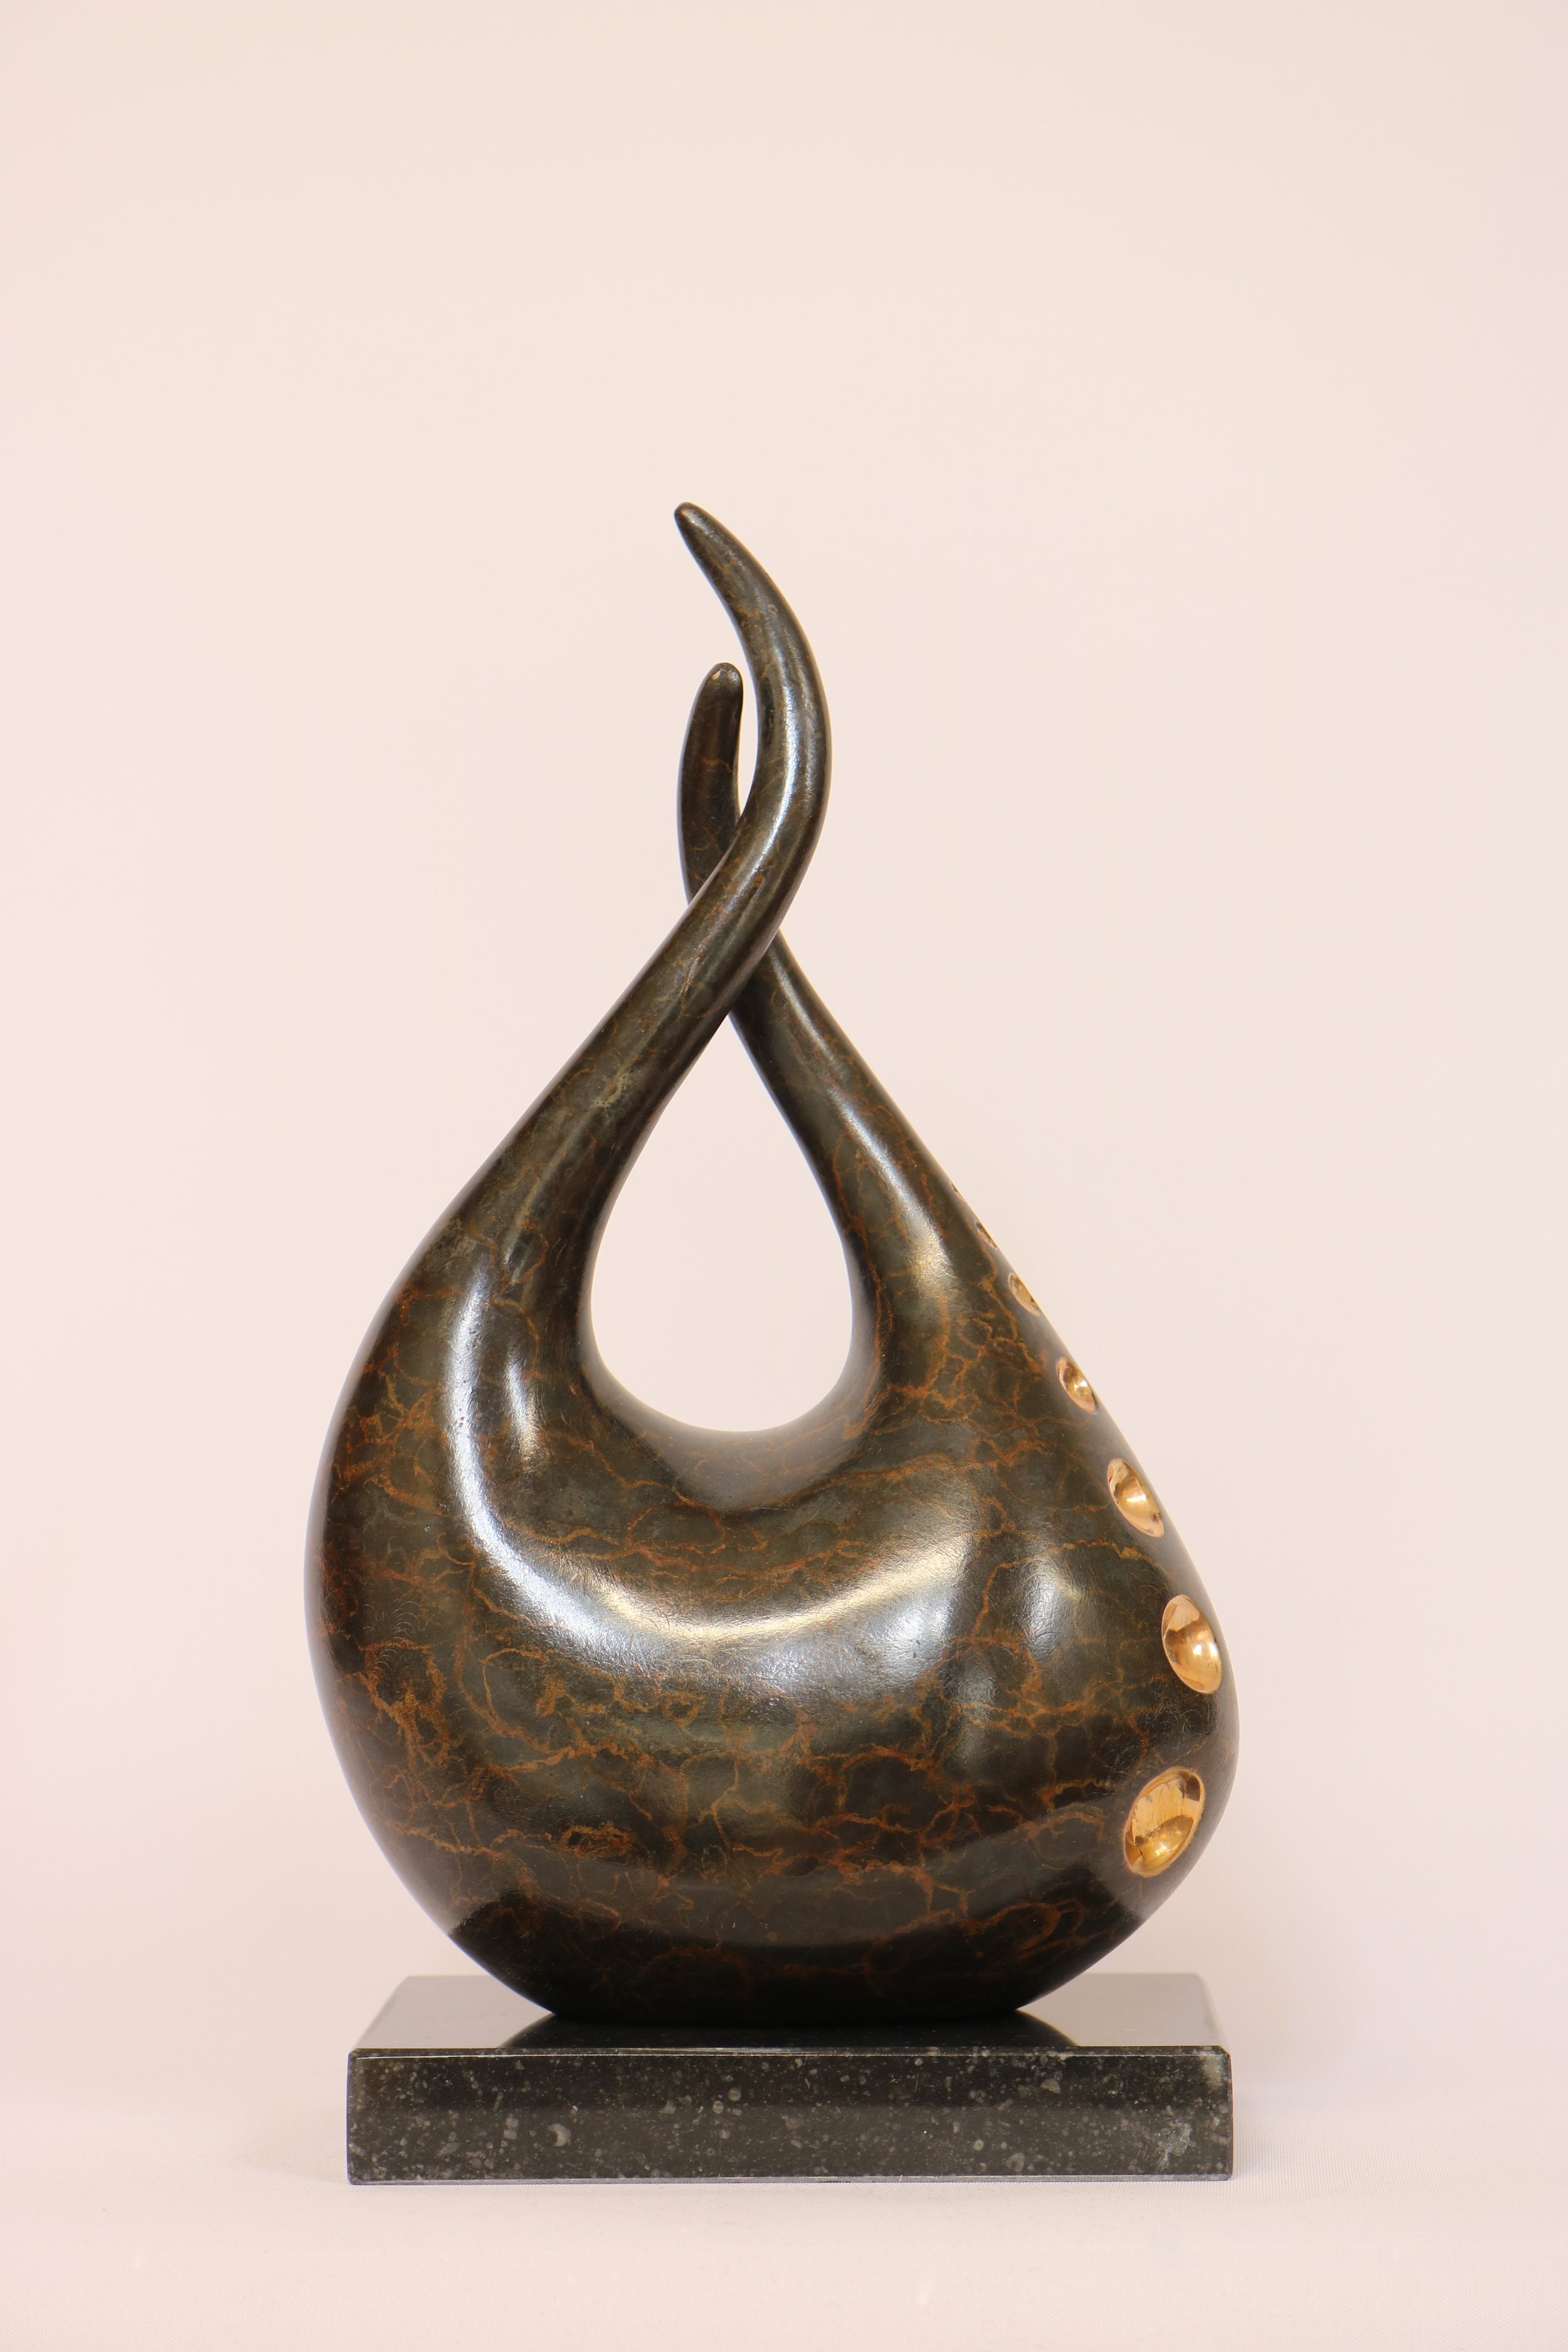 Ana Duncan Sculpture in Bronze and Ceramic